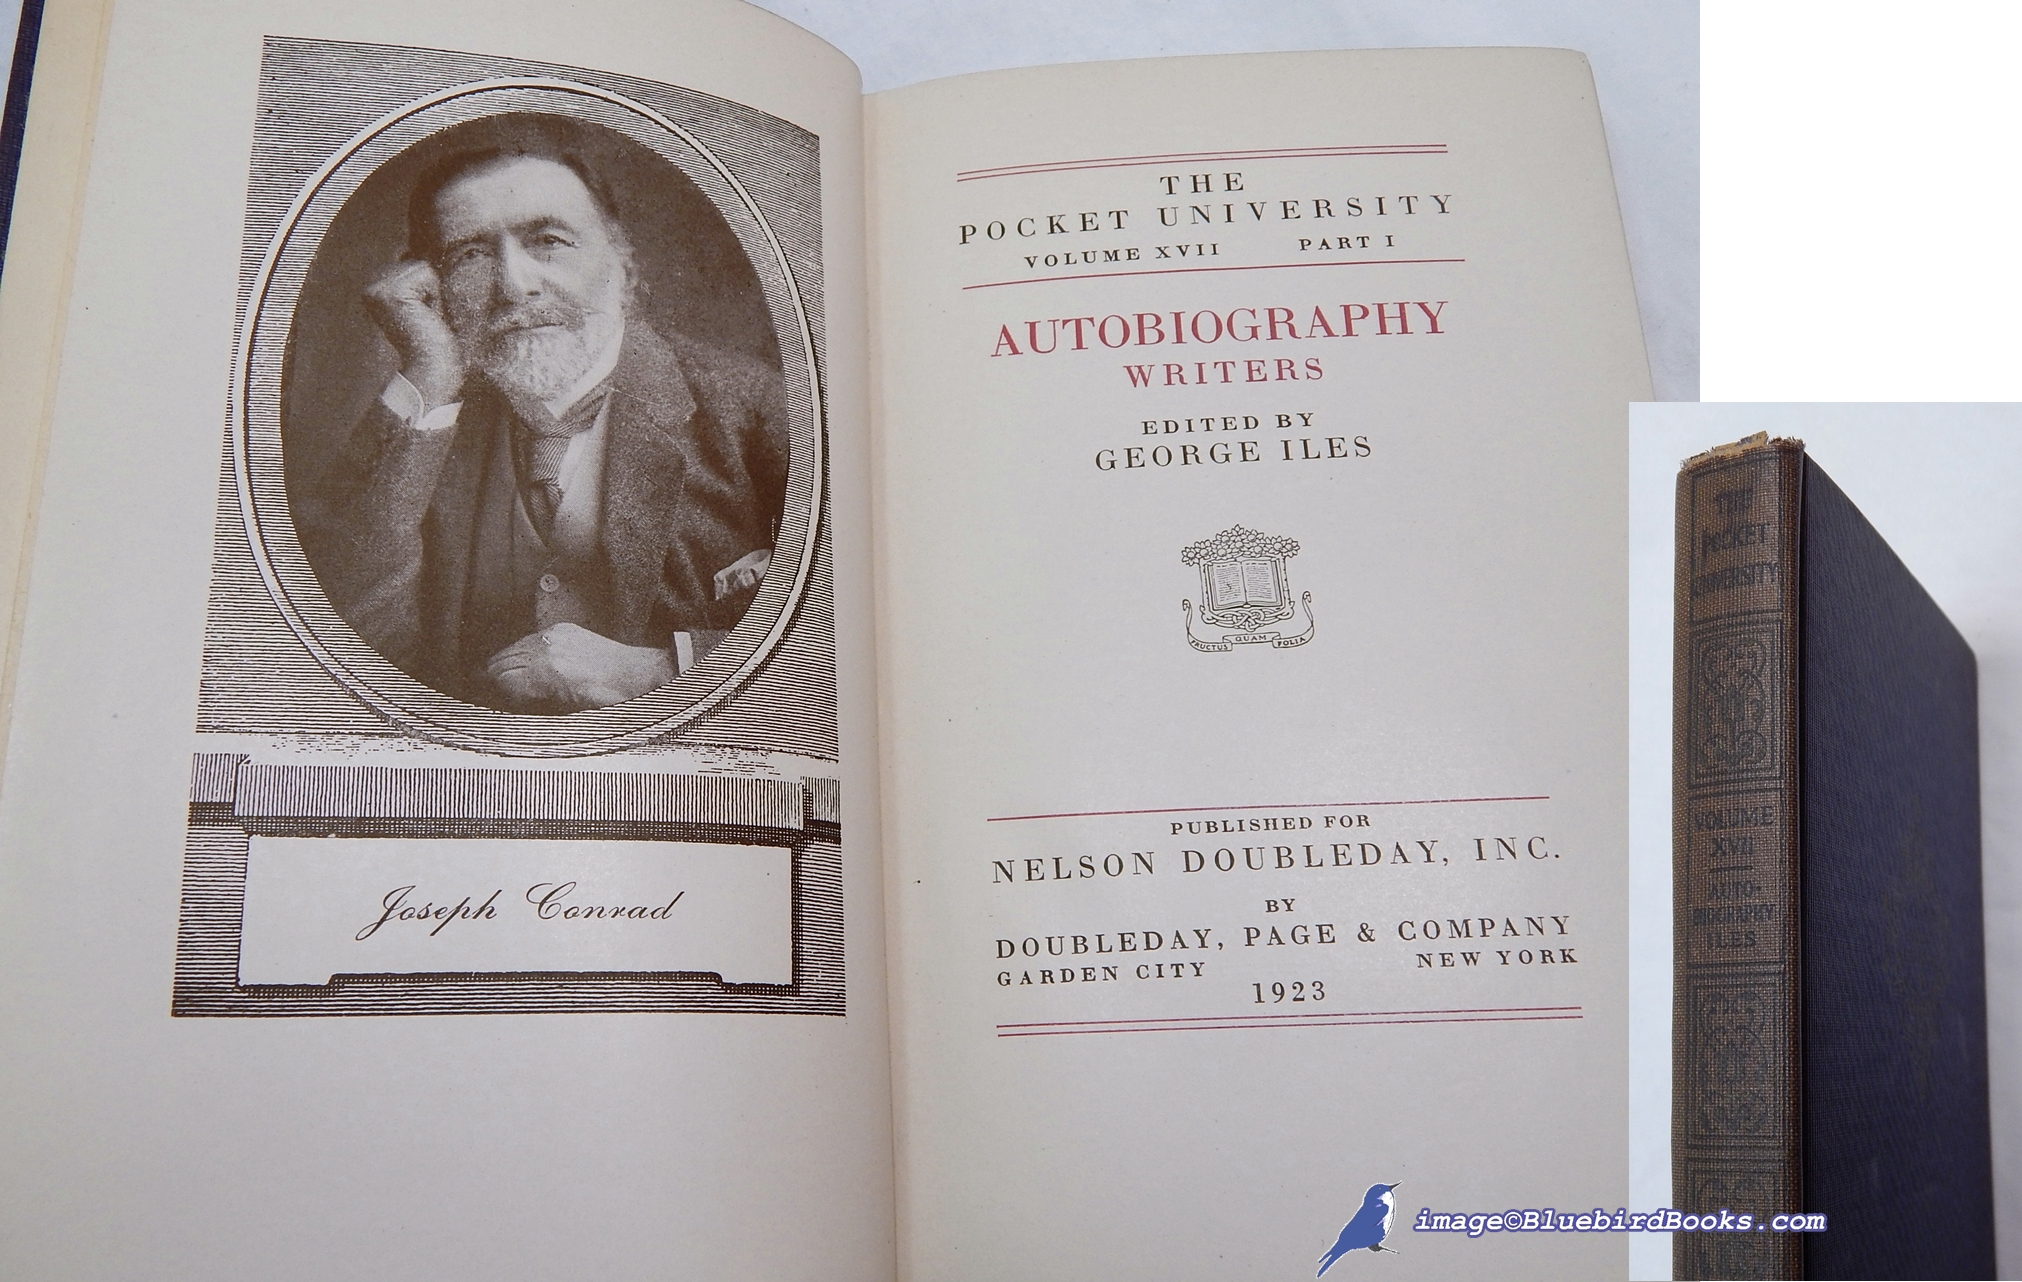 ILES, GEORGE (EDITOR) - The Pocket University Volume XVII: Part I, Autobiography, Writers & Part II, Autobiography, Actors